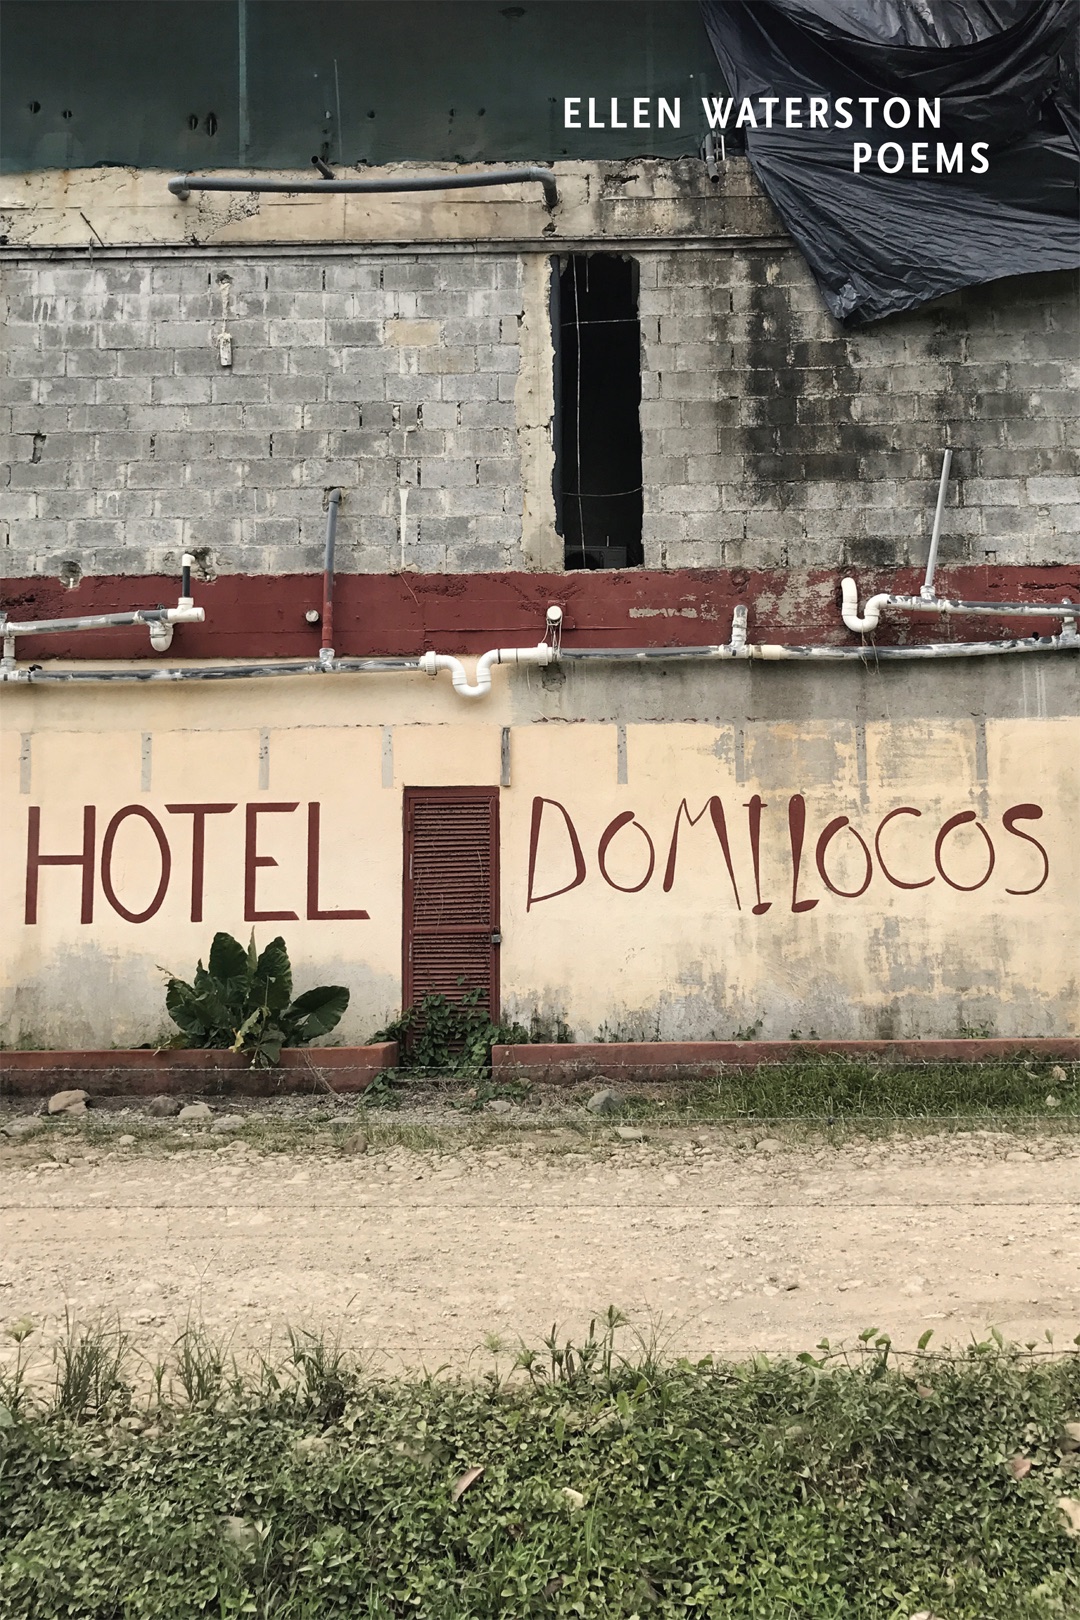 Hotel Domilocos, Poems by Ellen Waterston